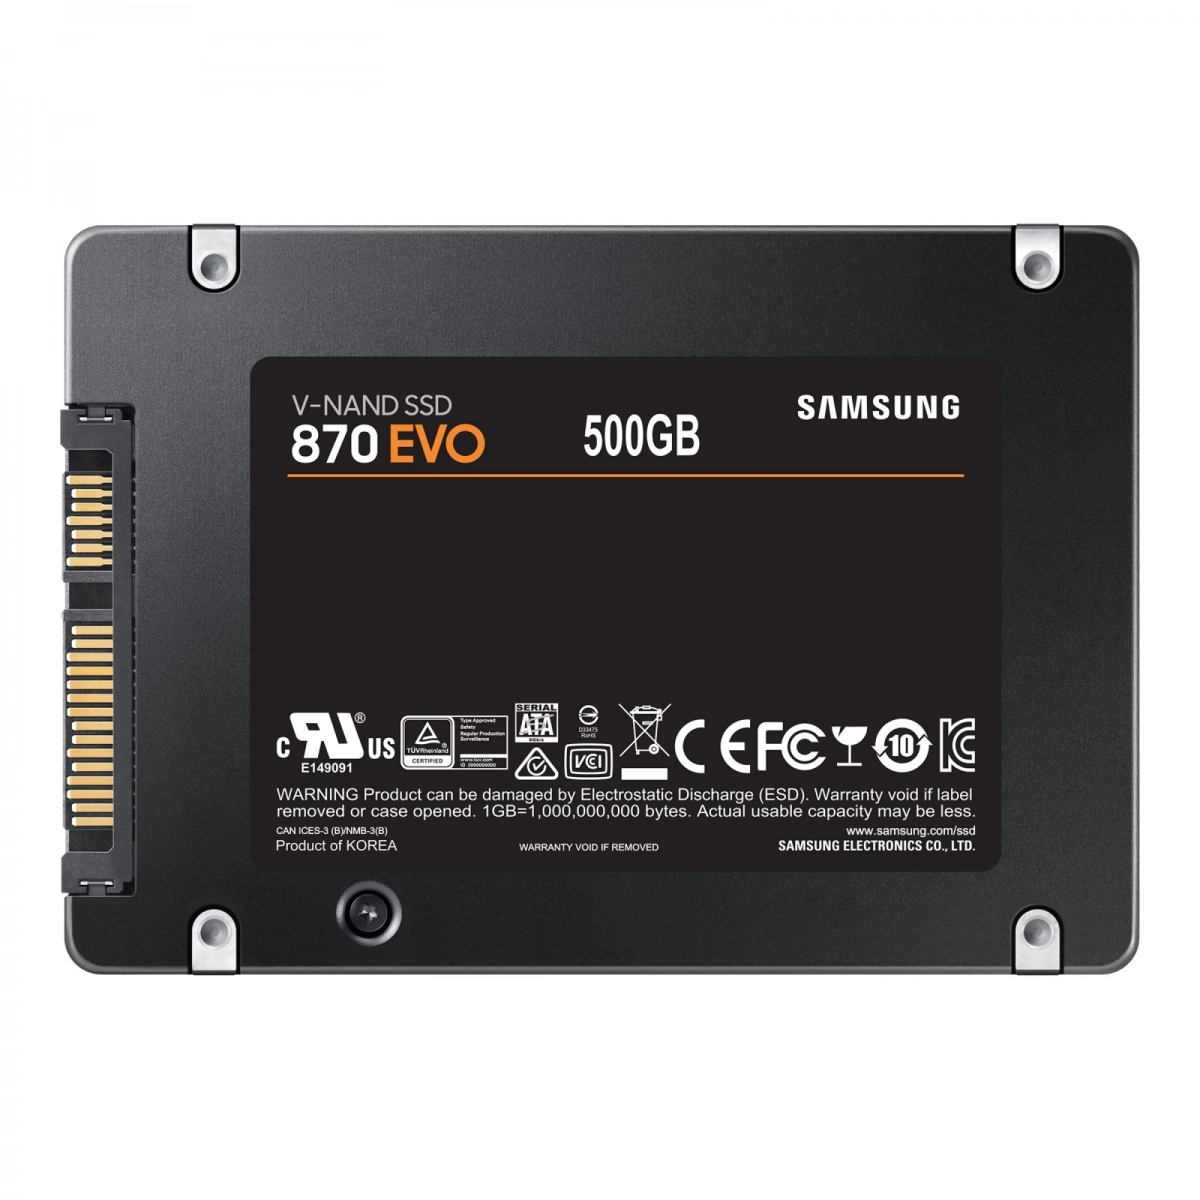 Notebook-Festplatte 500GB, SSD SATA3 MLC für LENOVO ThinkPad T560